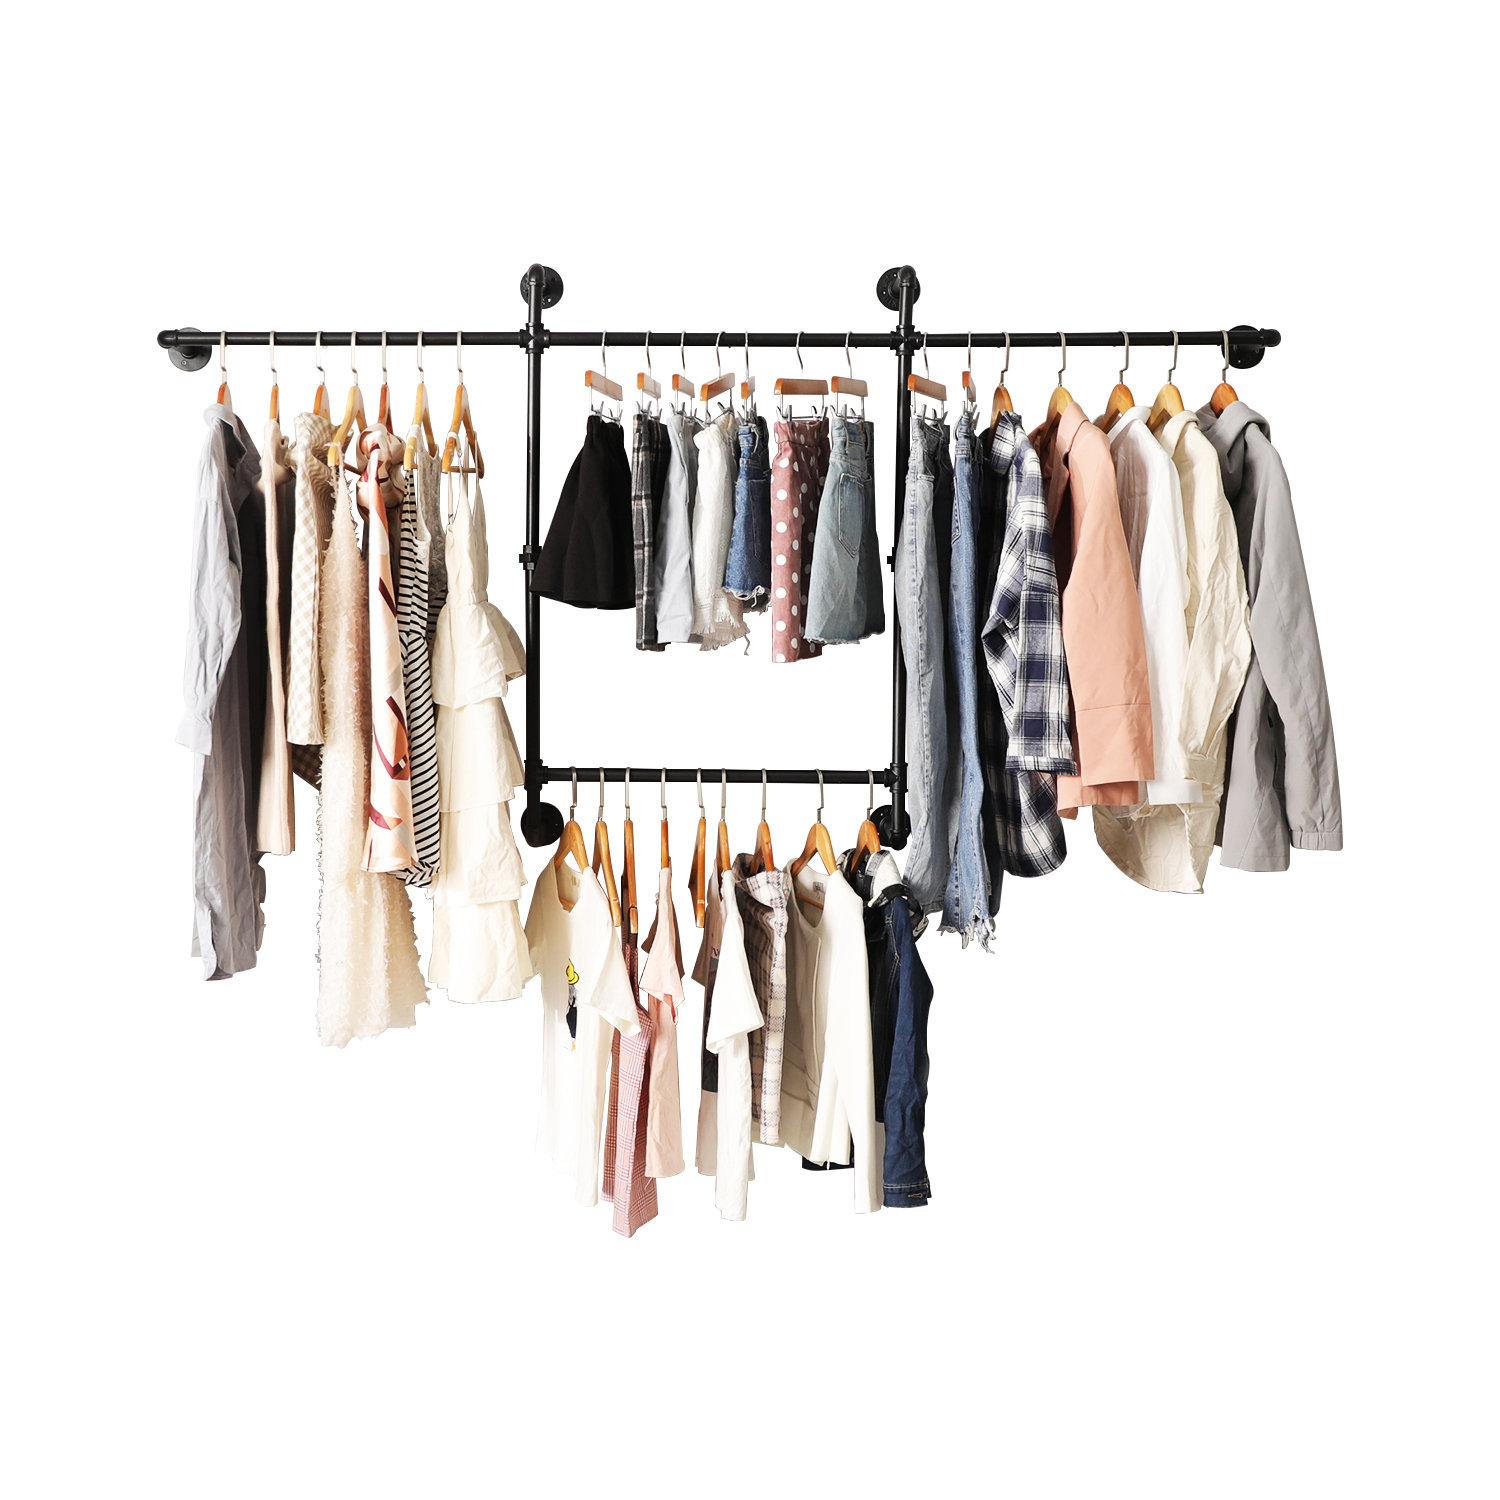 Wall-mounted Clothing Rack, Industrial Metal Hook. Wall Wardrobe Interior  Dressing Room Fittings, Cast Iron and Steel Coat Racks 